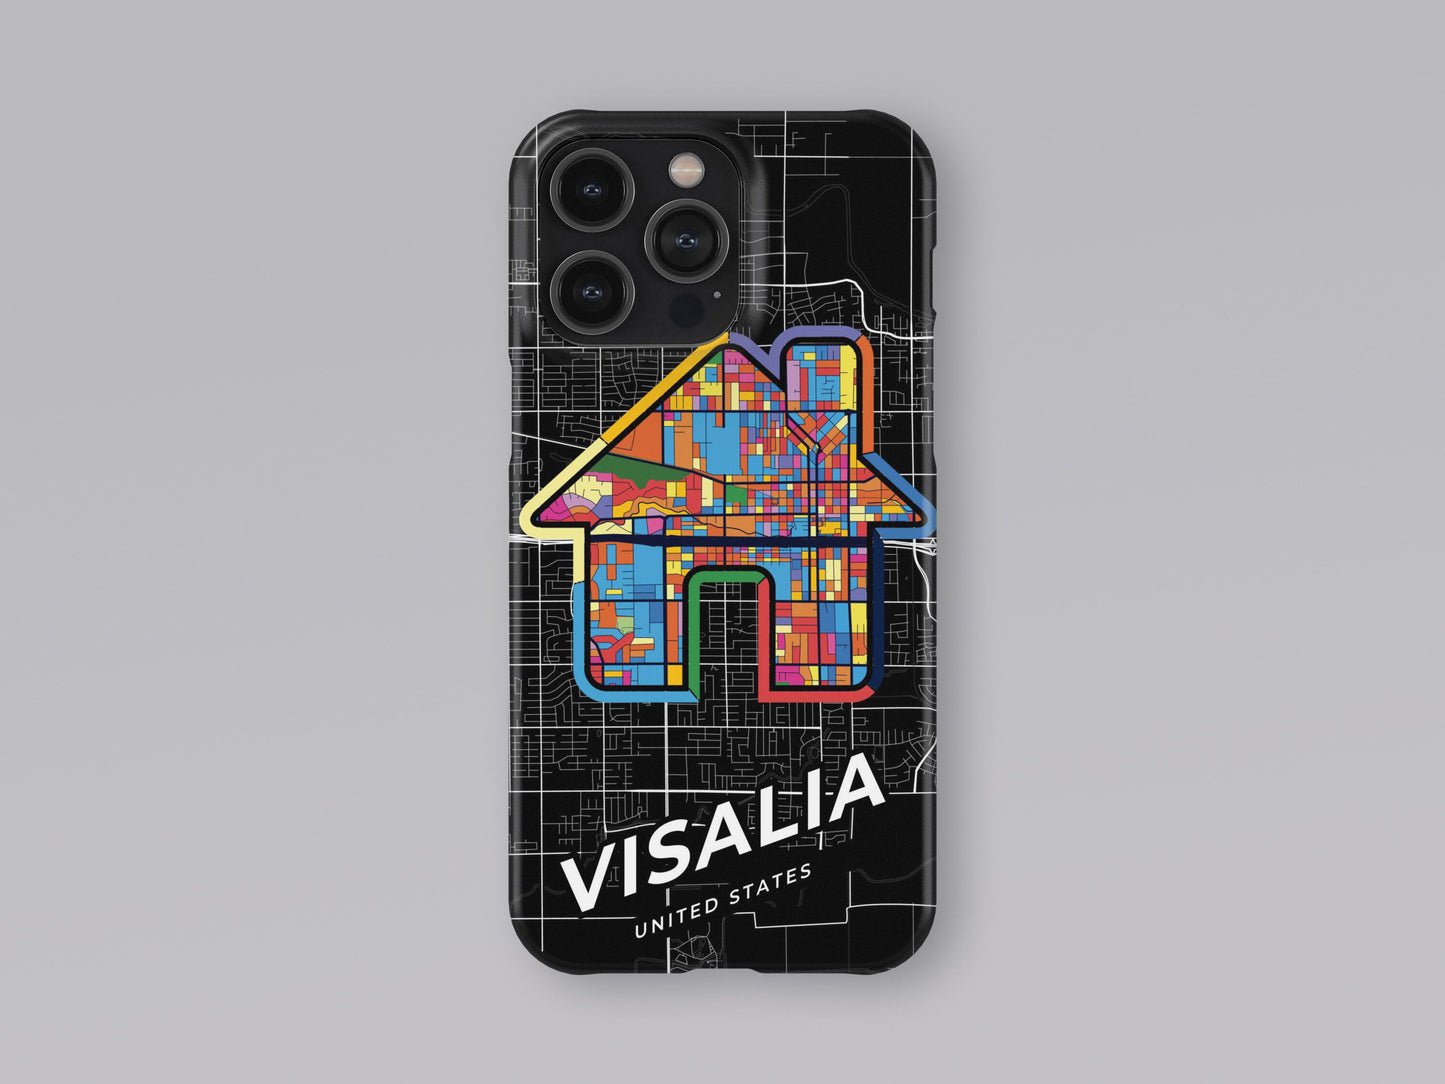 Visalia California slim phone case with colorful icon 3